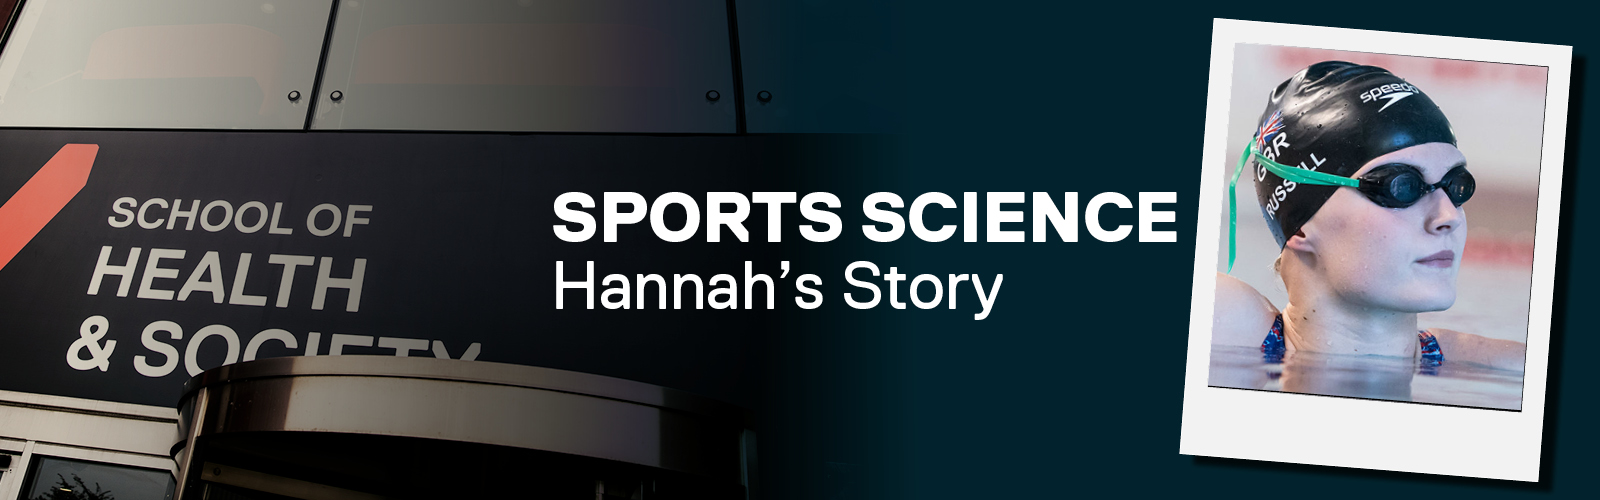 Sport Science Blog Image - Hannah's story